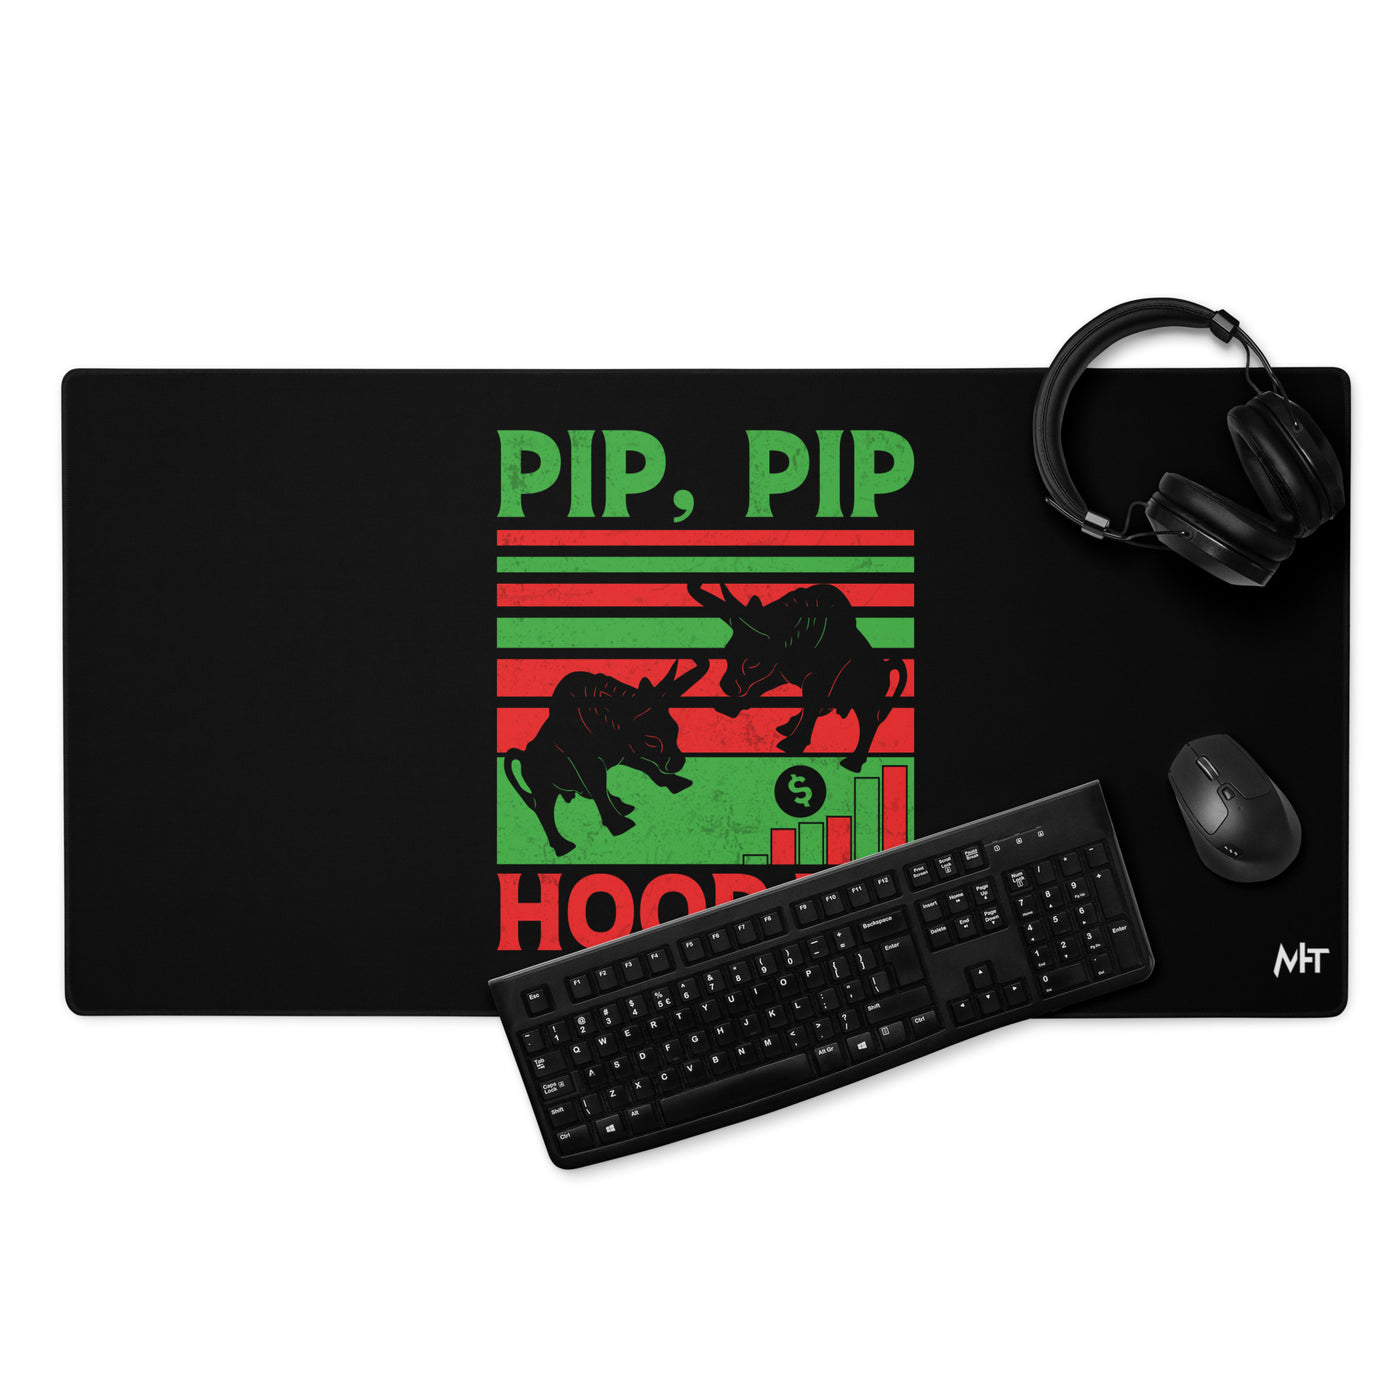 Pip, Pip Hooray - Desk Mat